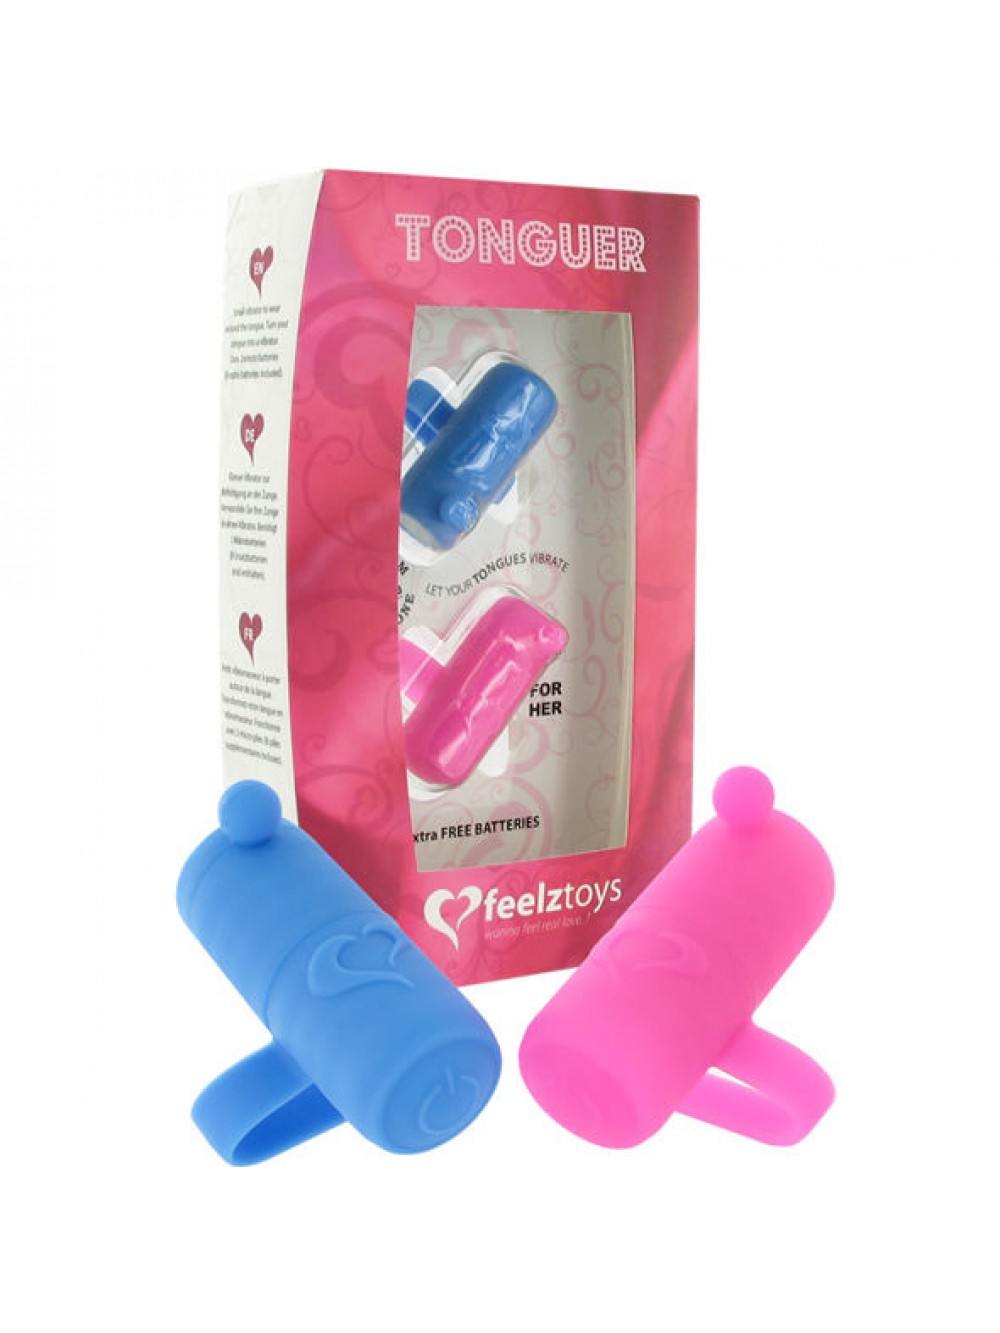 Tonguer